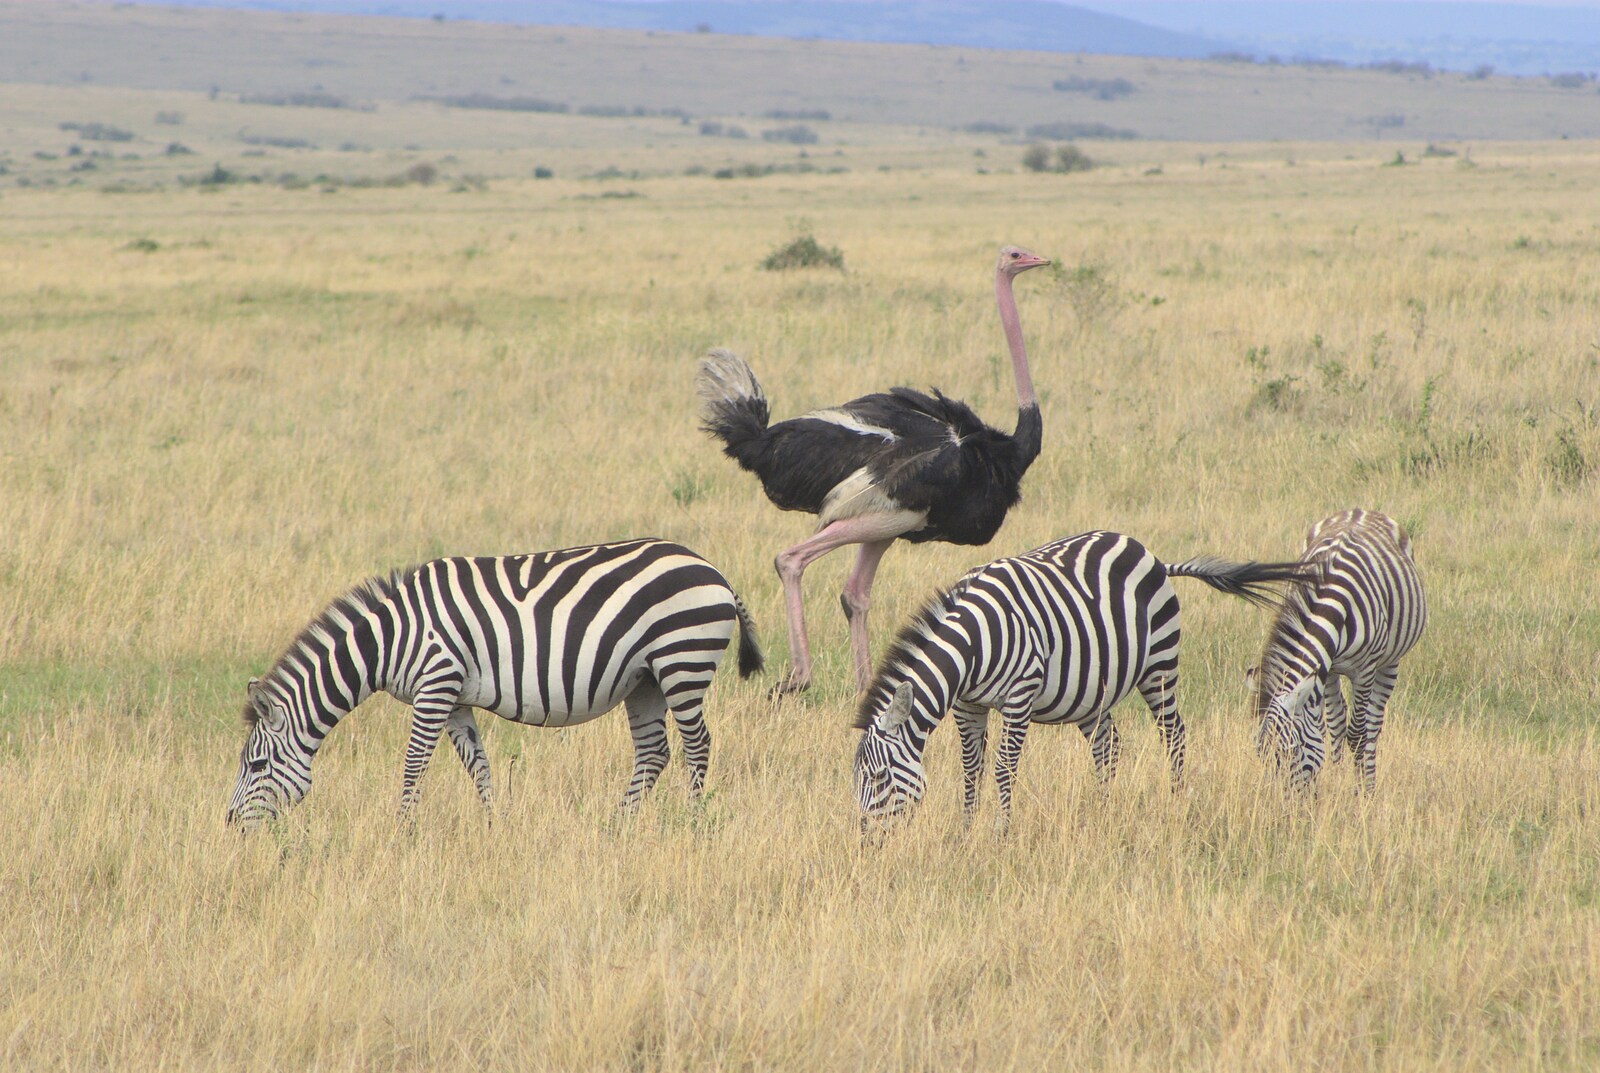 Maasai Mara Safari and a Maasai Village, Ololaimutia, Kenya - 5th November 2010: Zebra and ostrich